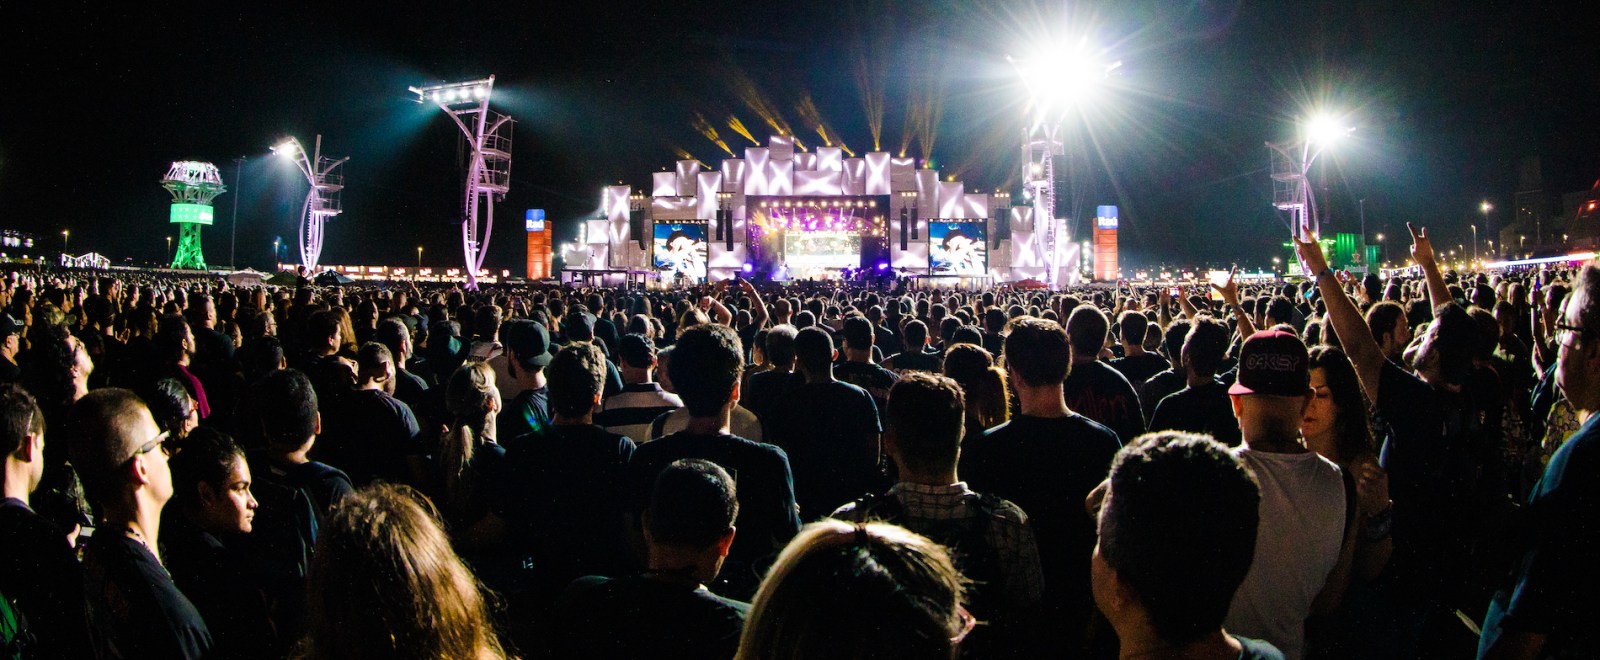 music-festival-concert-crowd-audience-getty-full.jpg